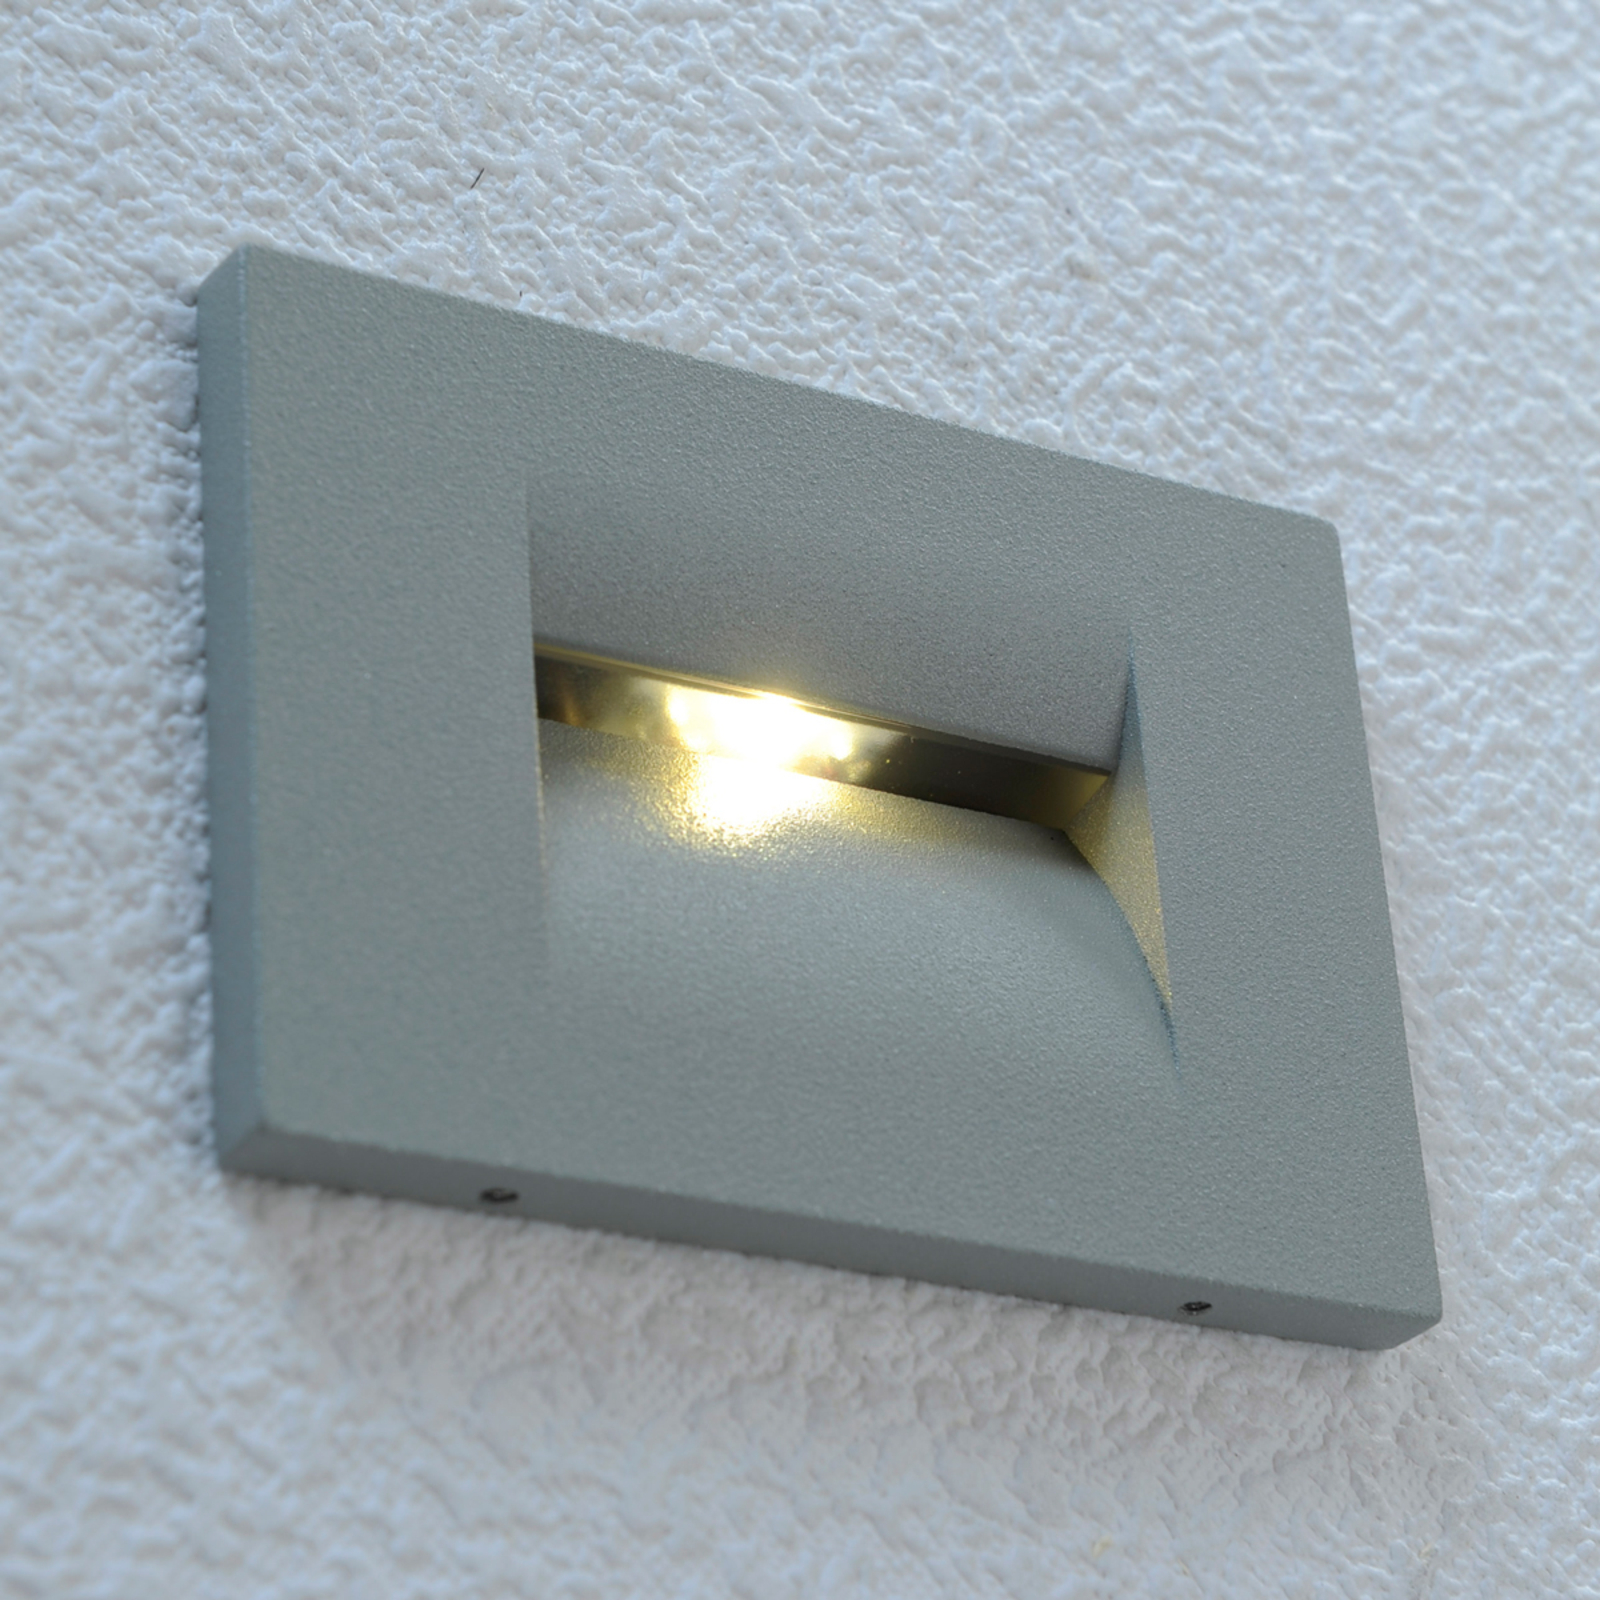 Nevin silver grey LED wall light